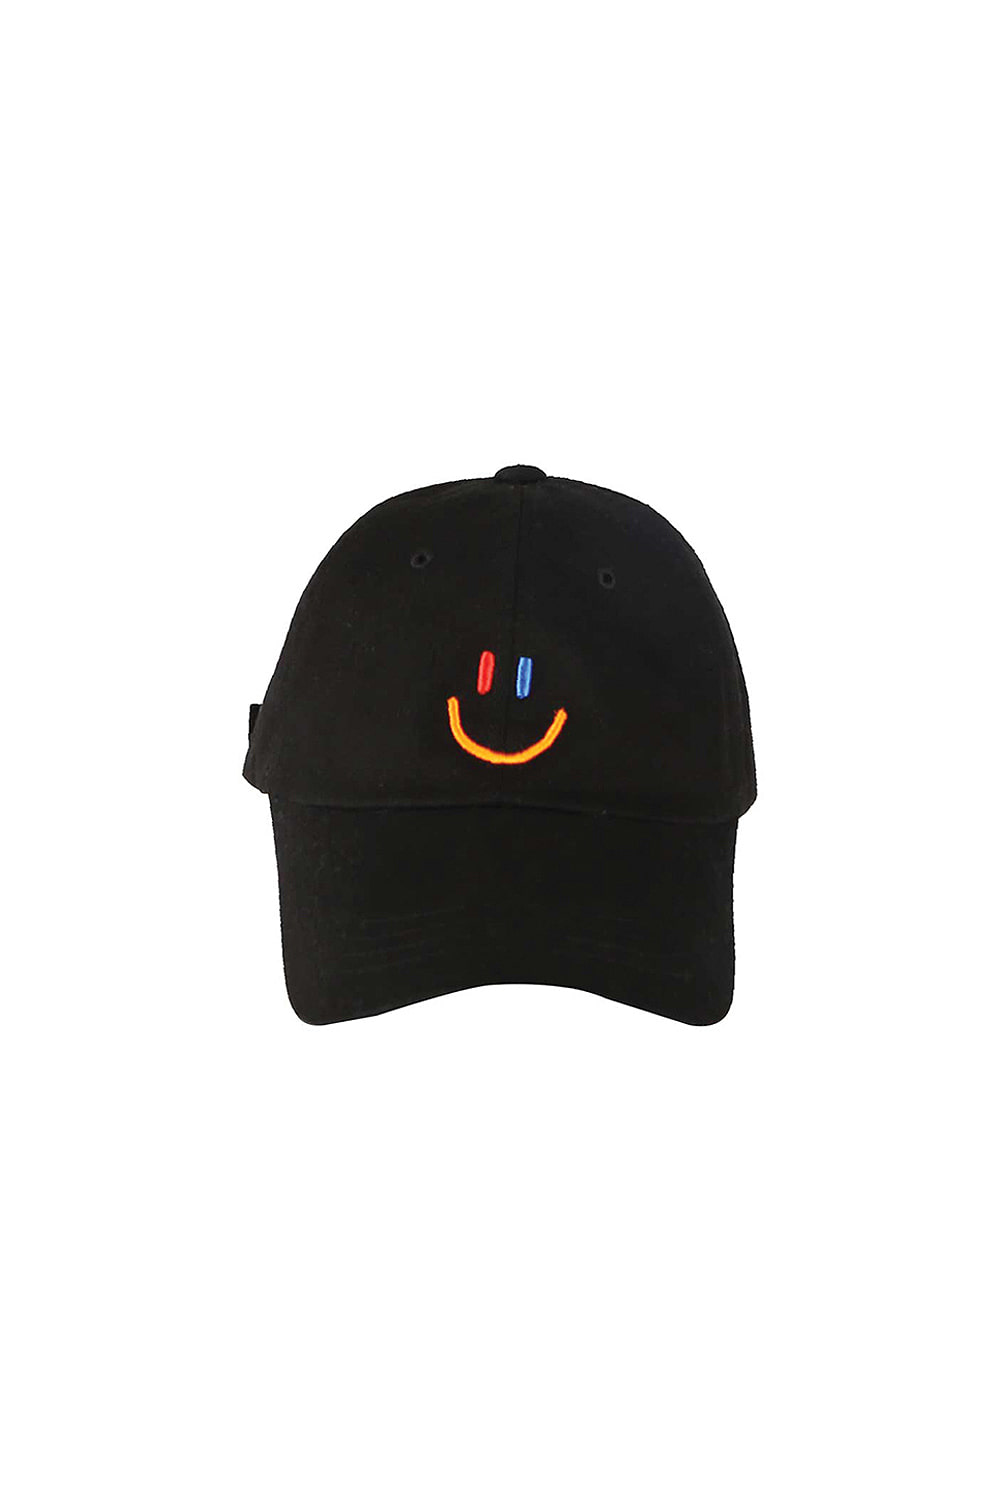 LaLa Smile Ball Cap [Black]